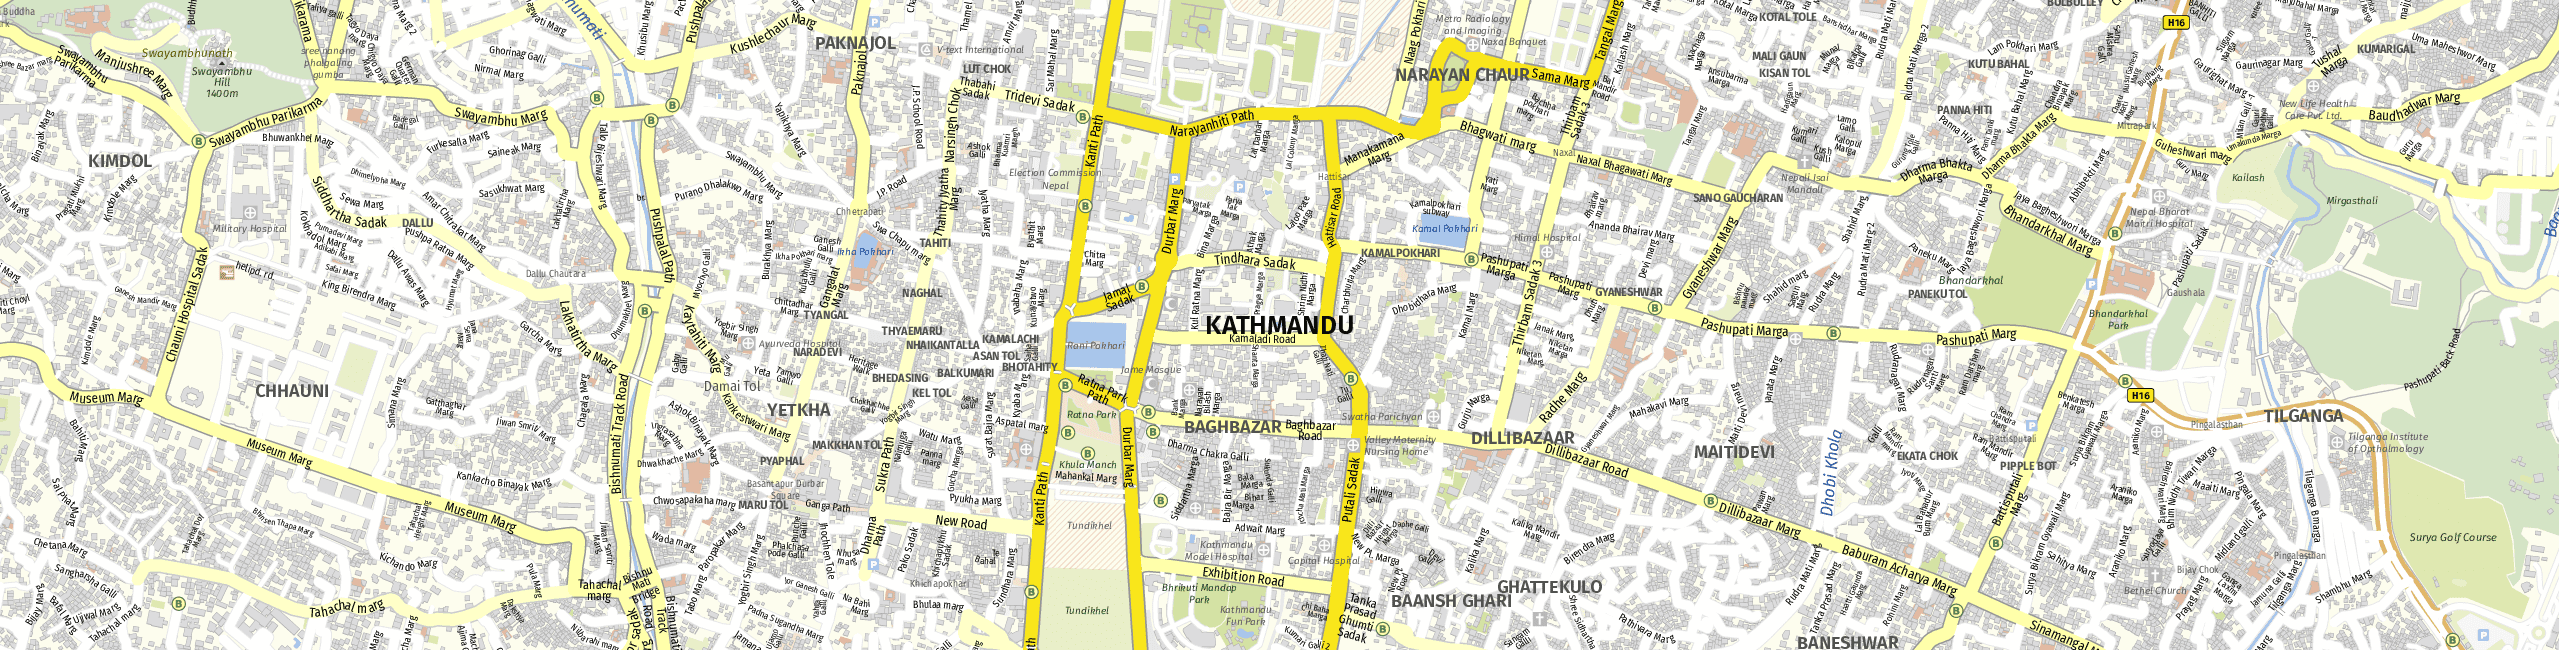 Stadtplan Kathmandu zum Downloaden.